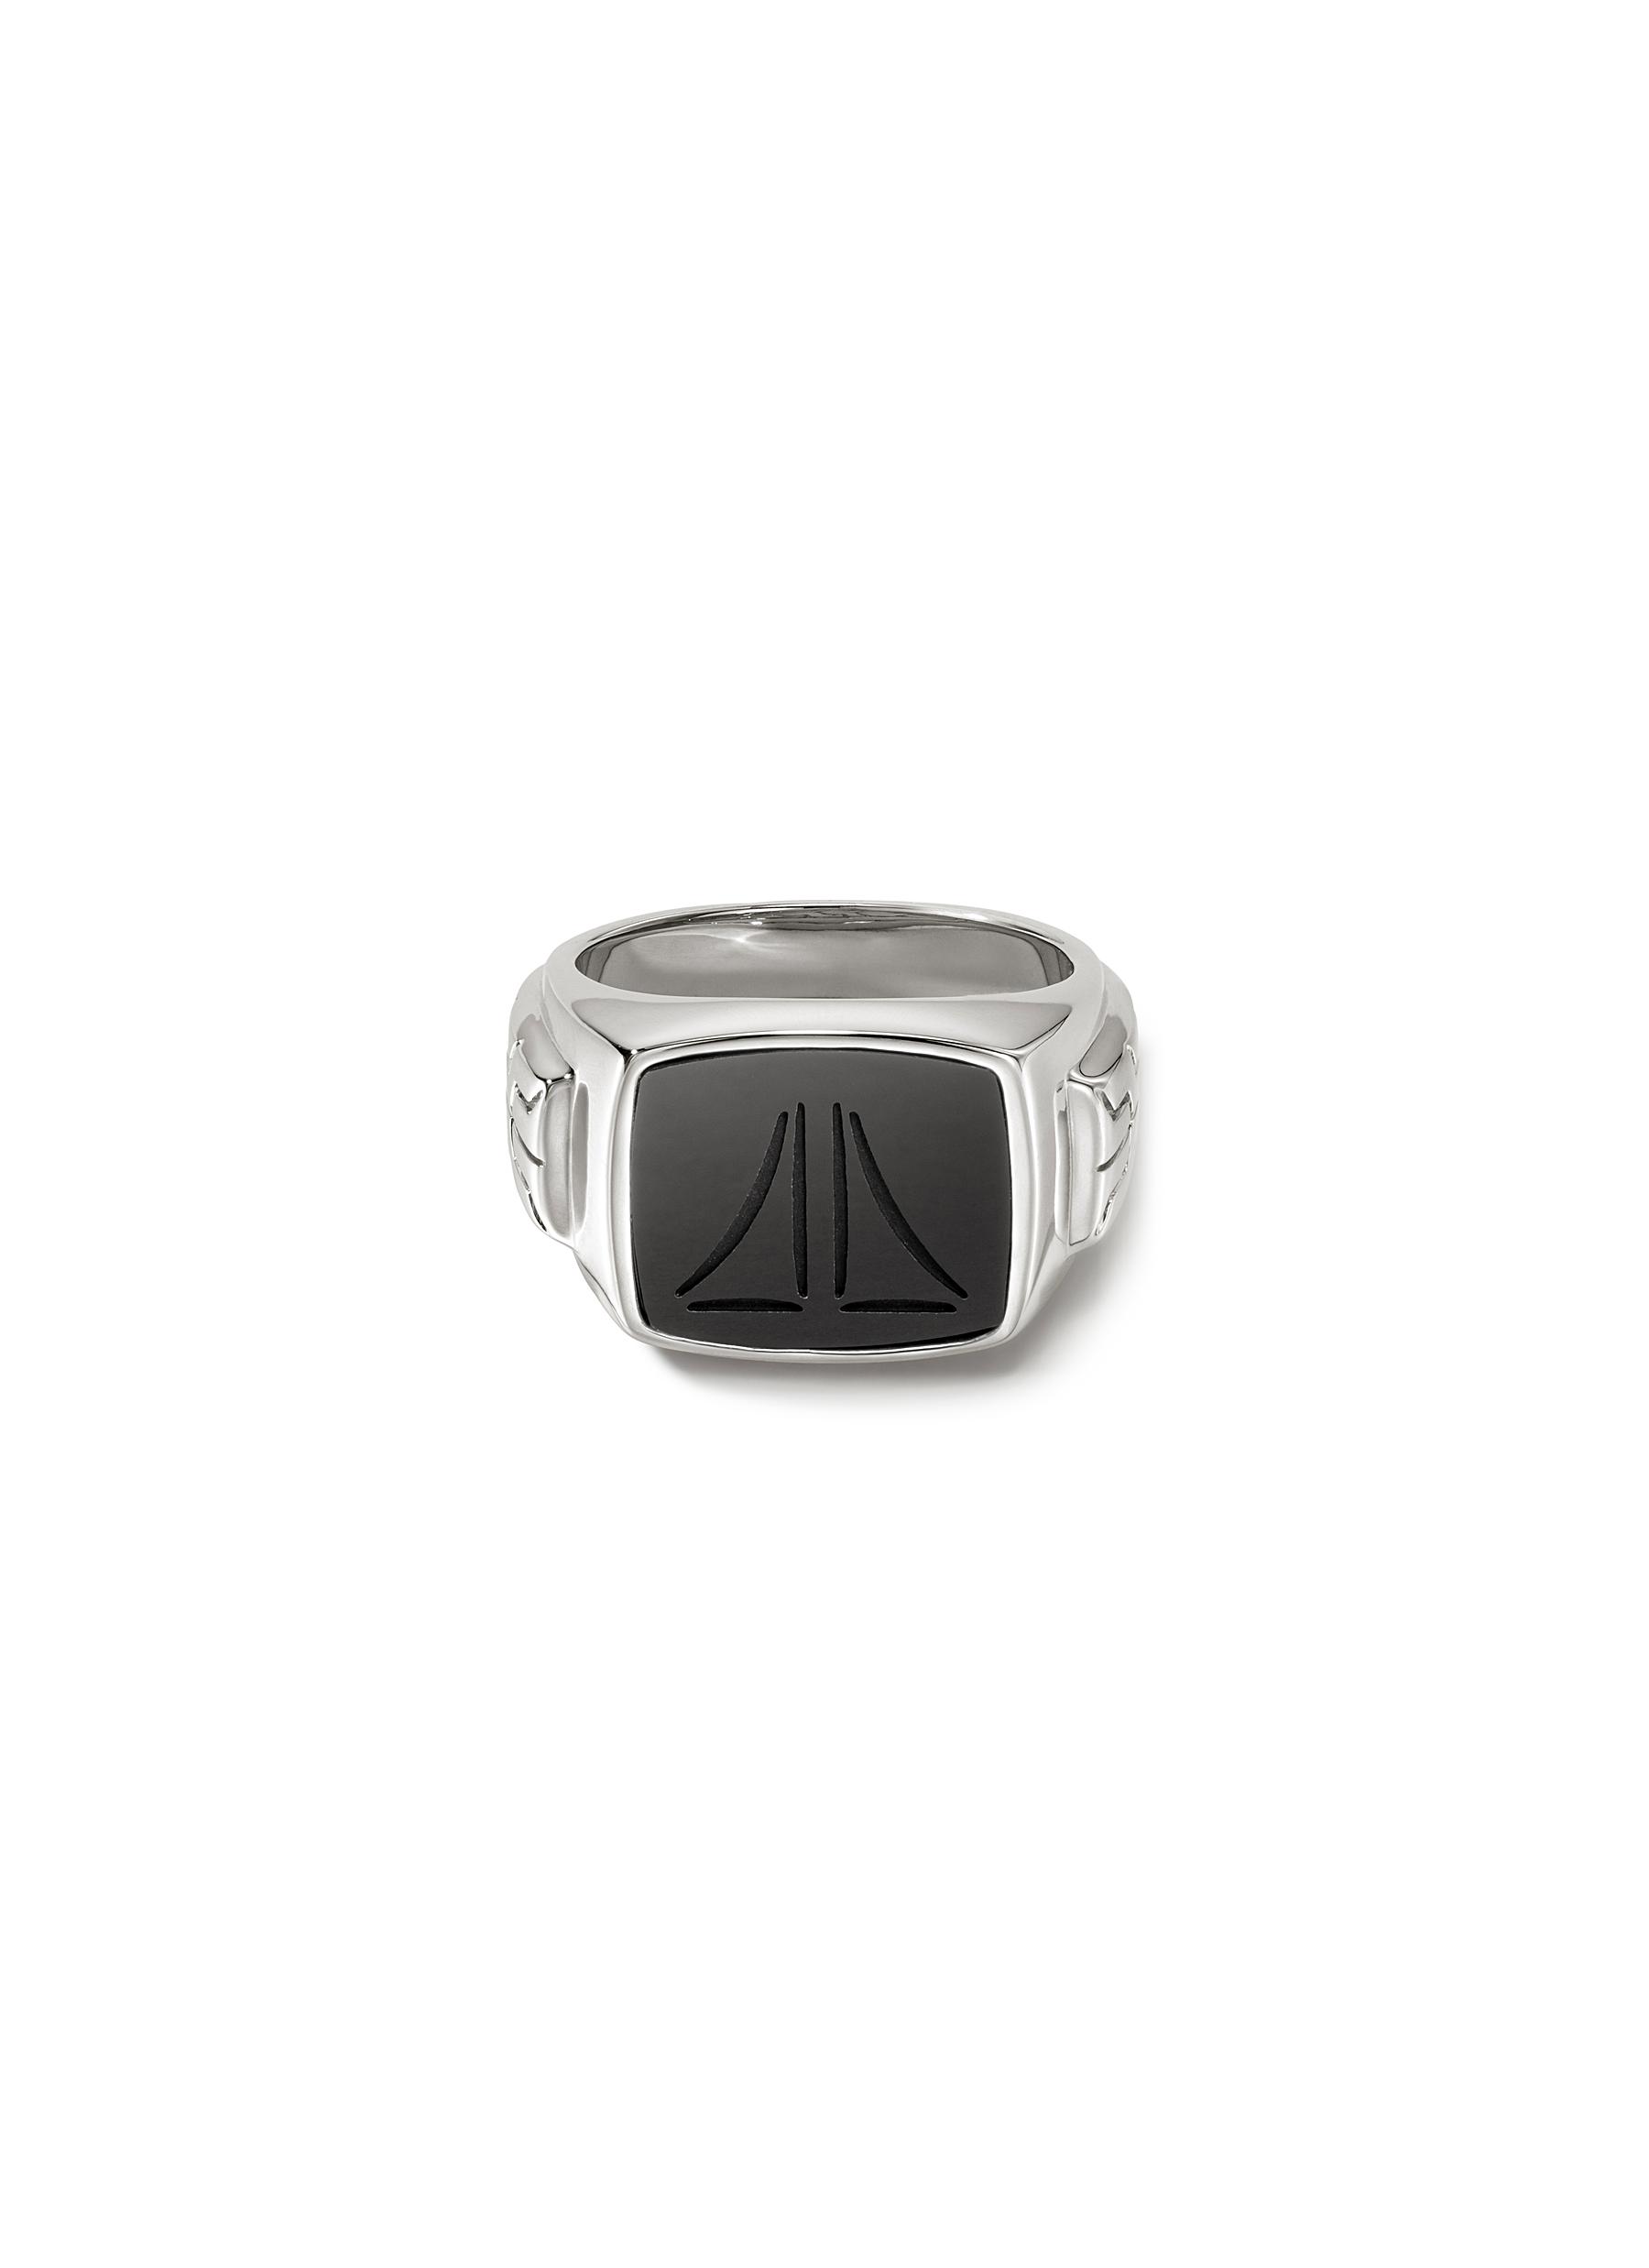 Peridot Gemstone 925 Sterling Silver Ring Valentine Day Jewelry All Size  EC-116 | eBay